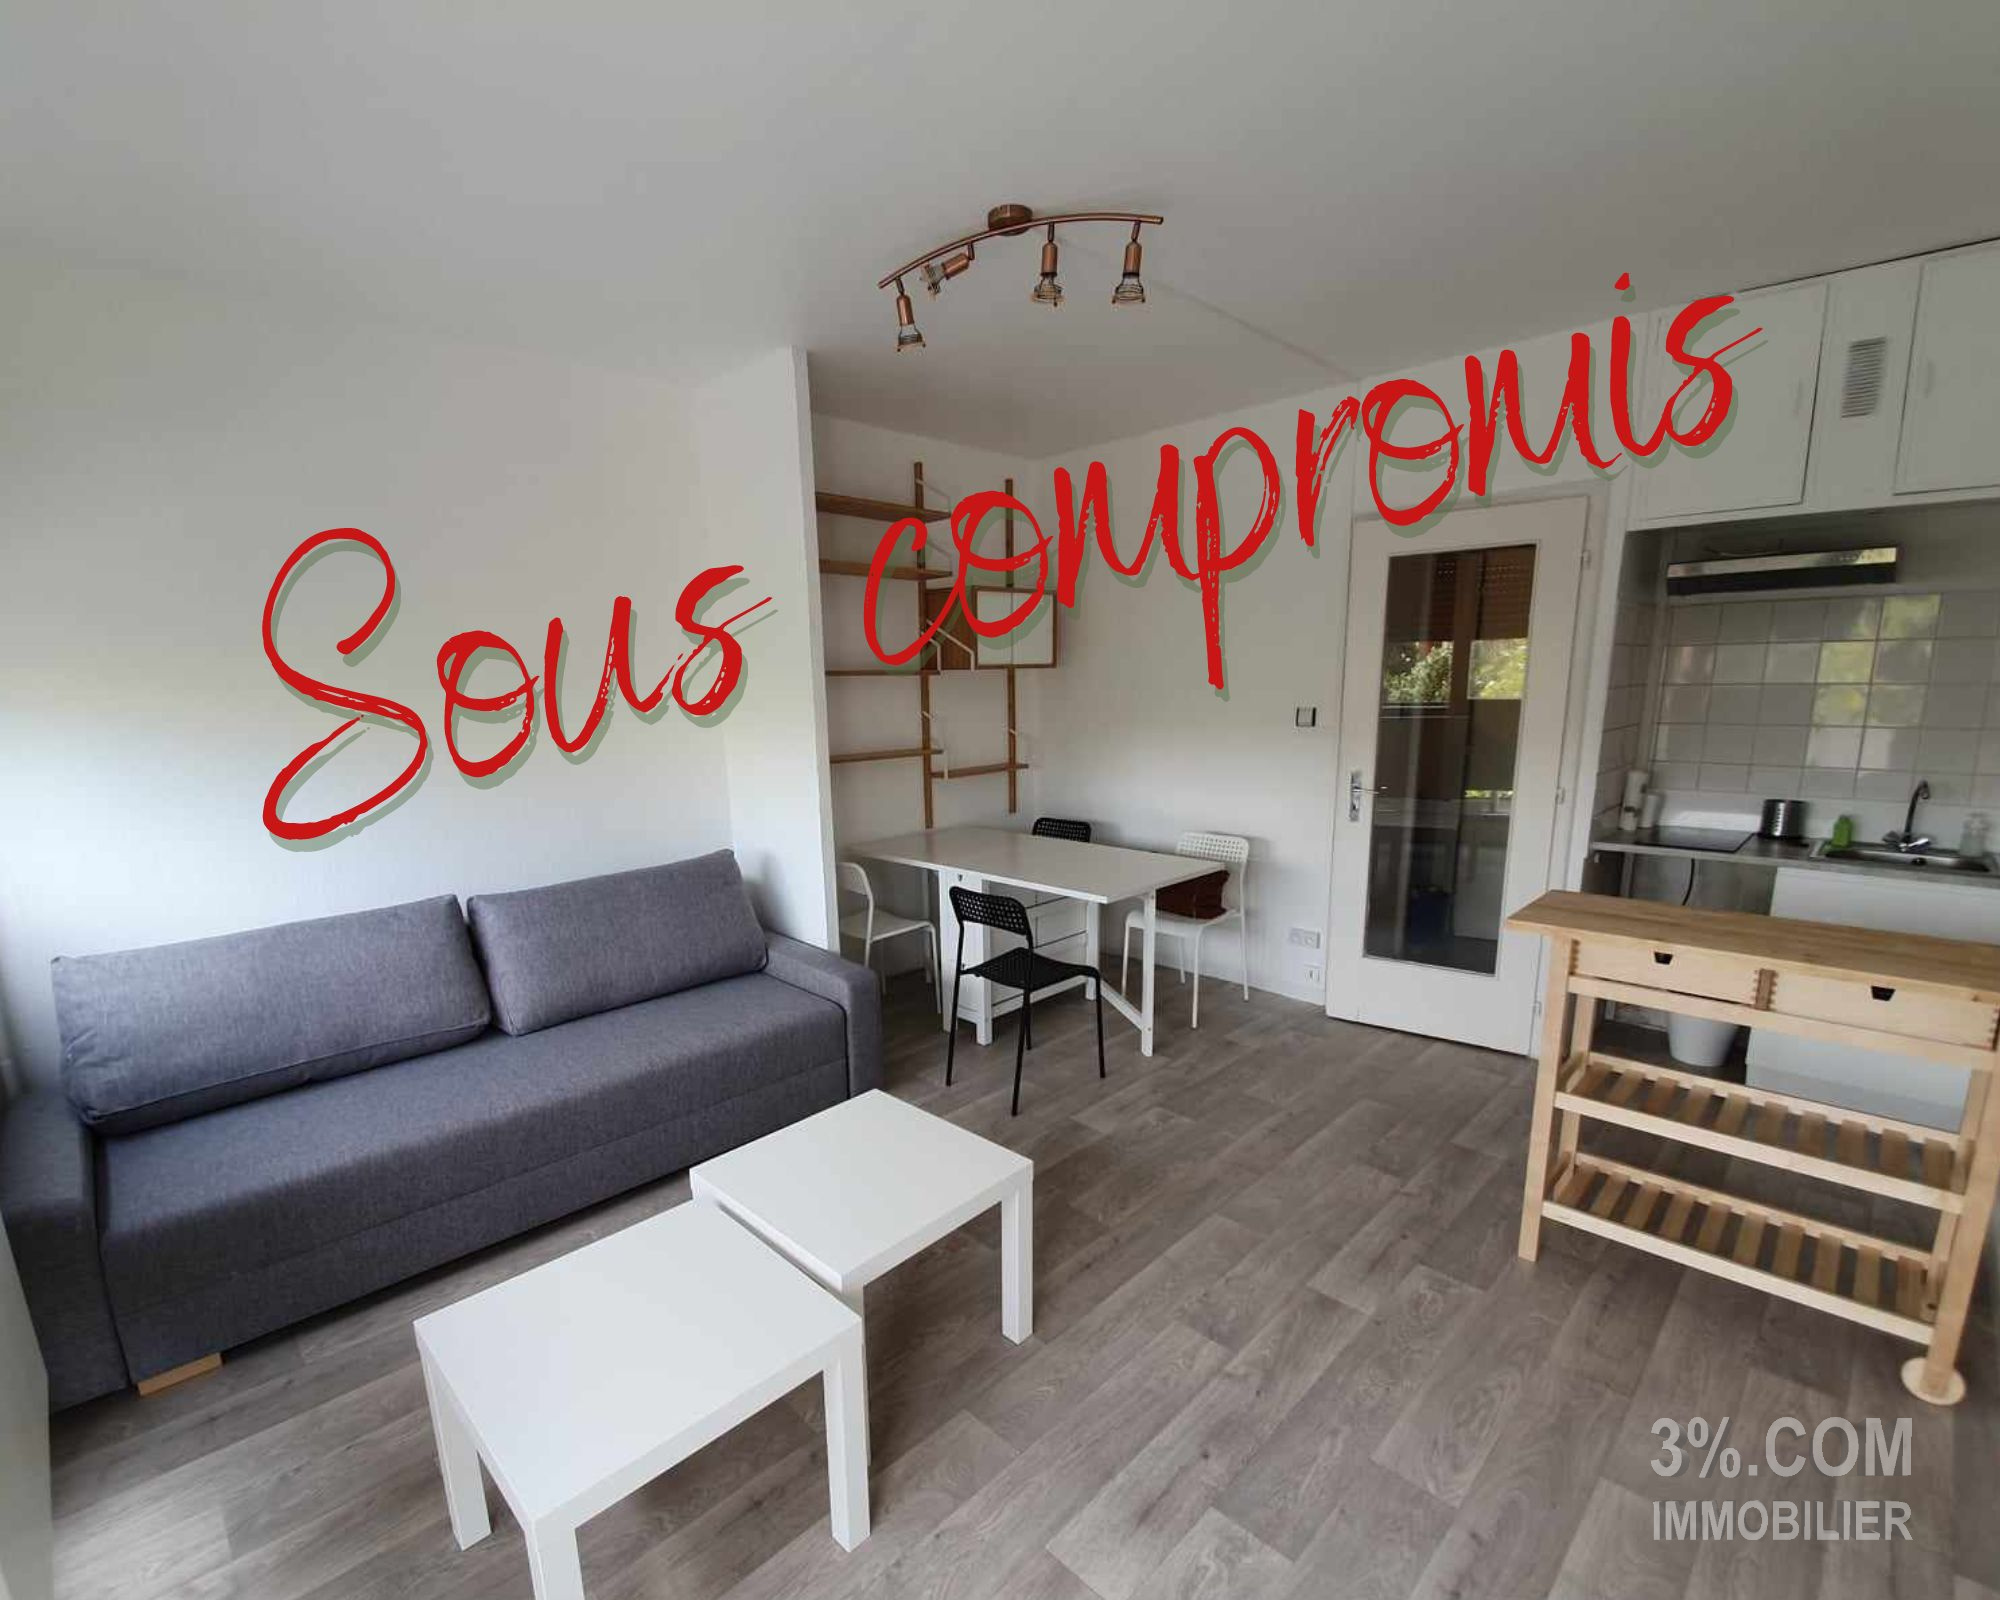 Vente Appartement 24m² 1 Pièce à Strasbourg (67100) - 3%.Com